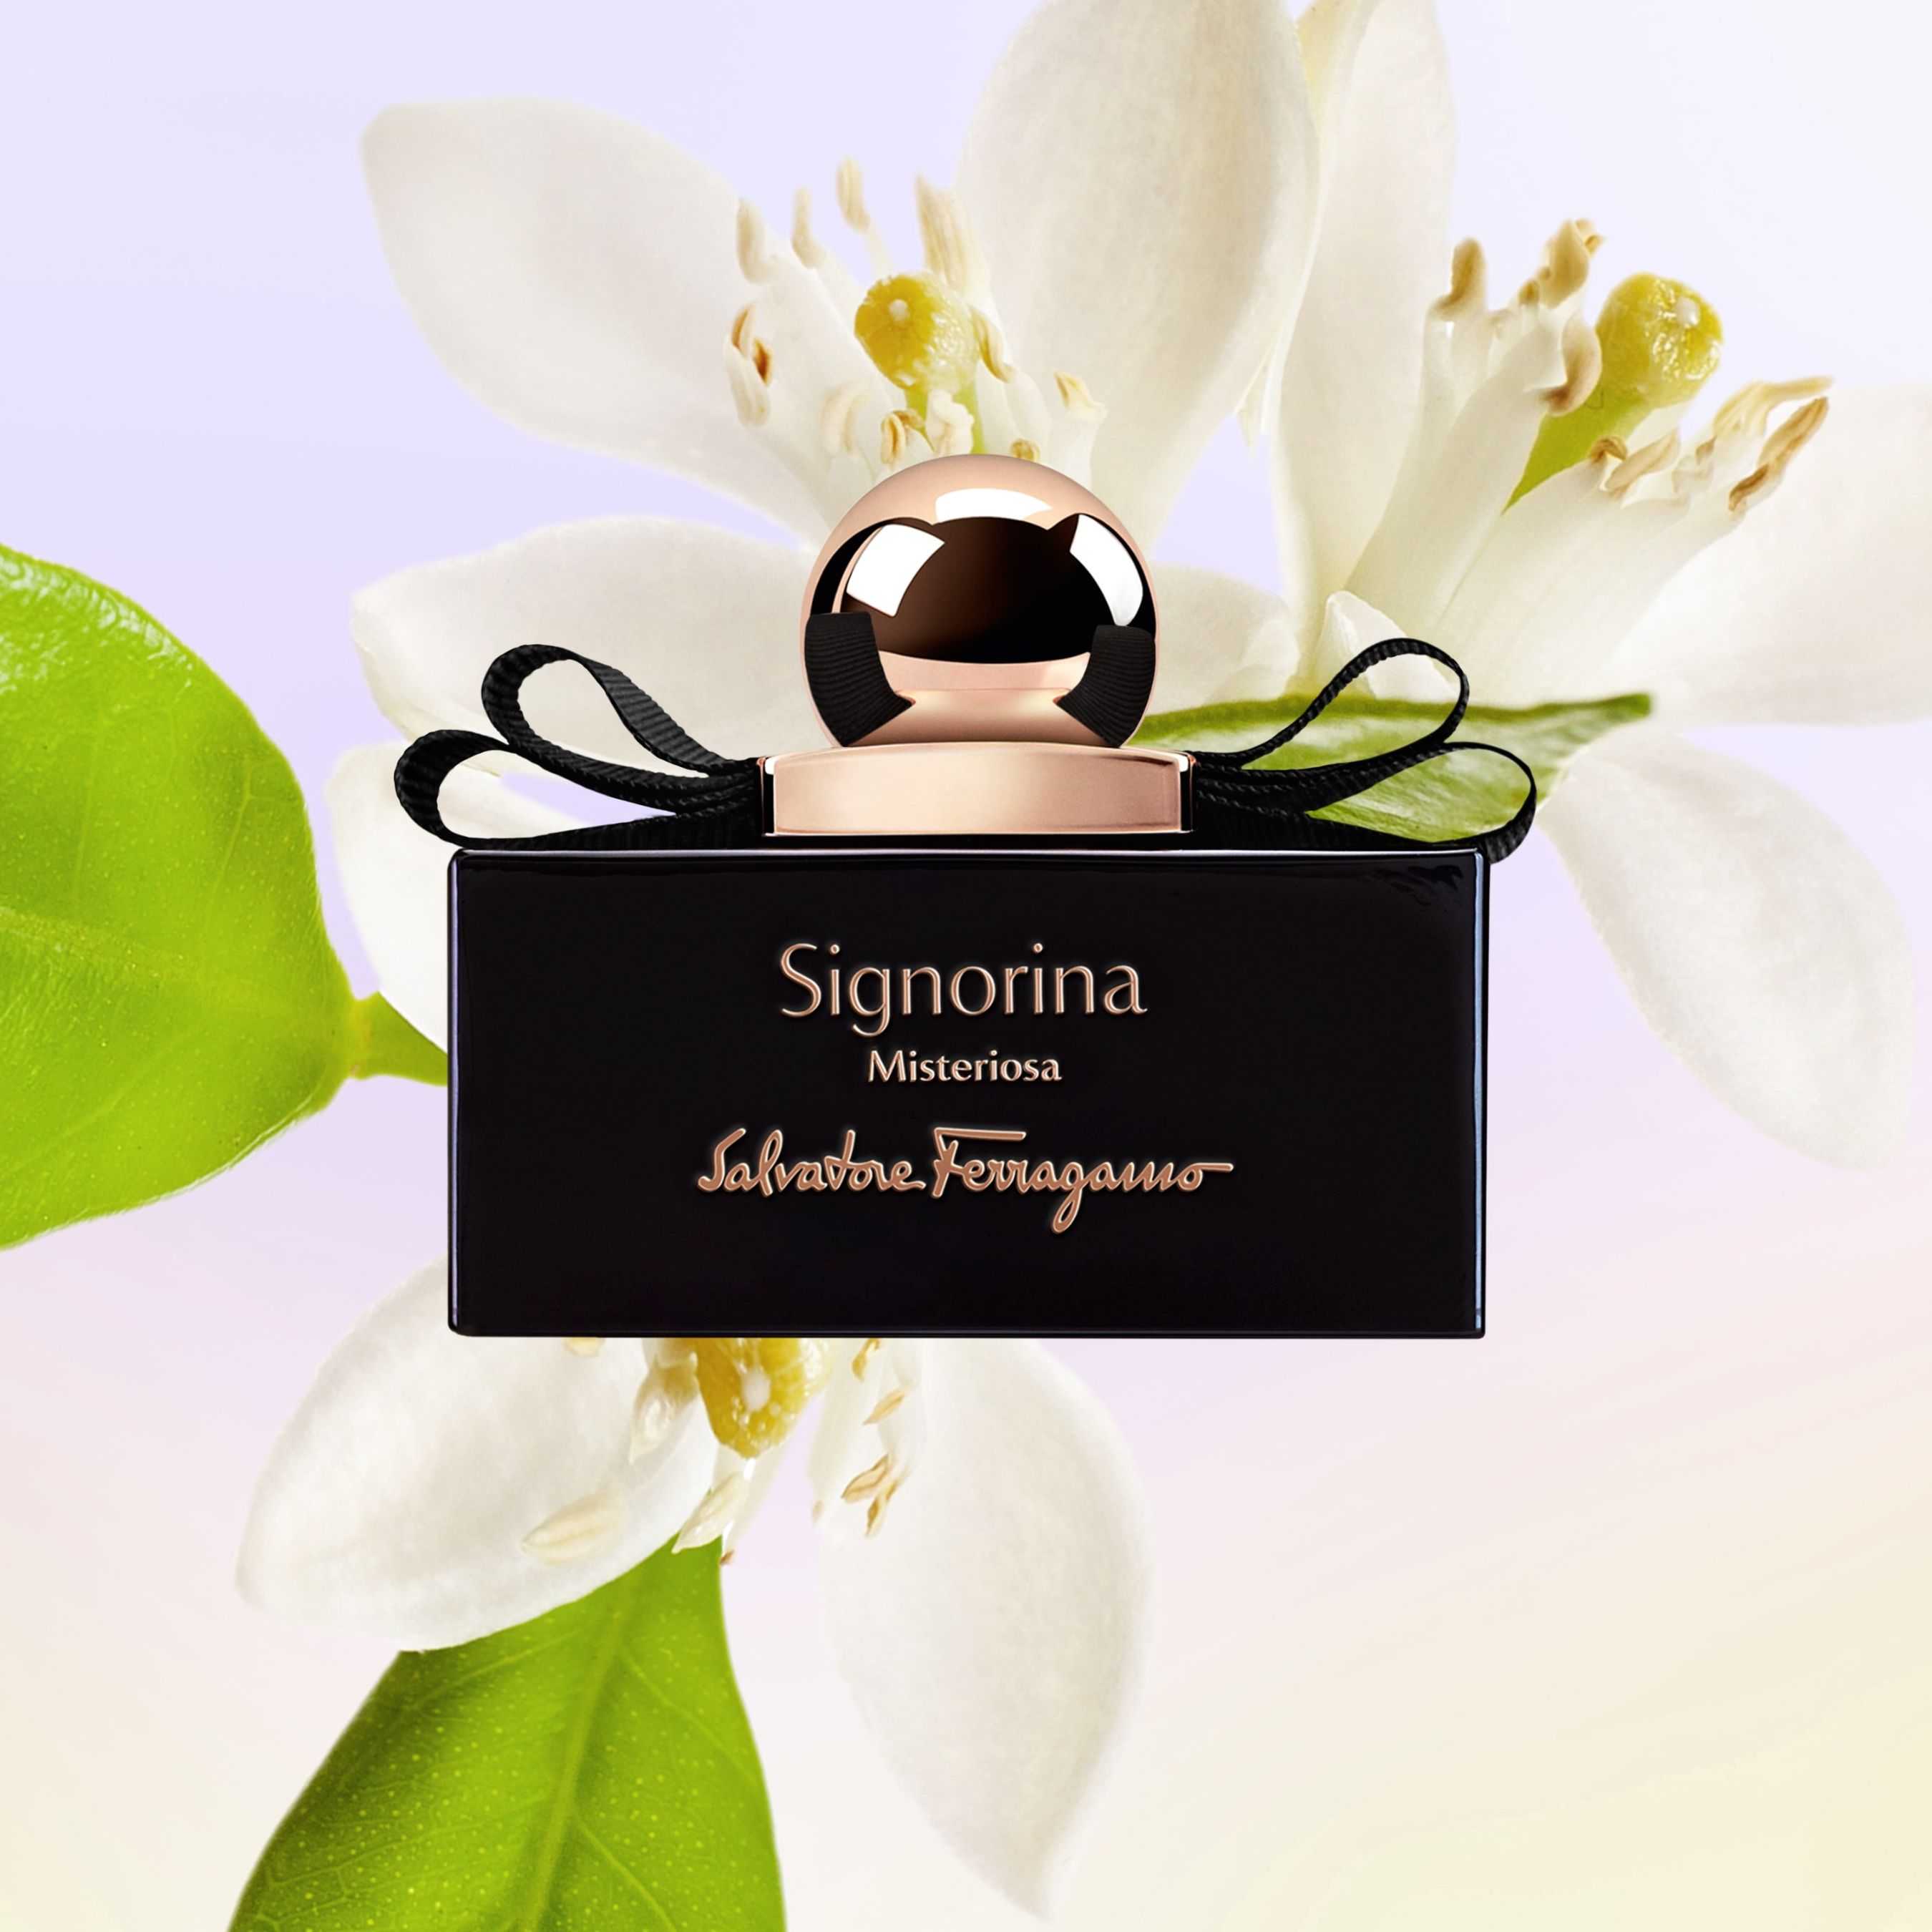 Salvatore Ferragamo nước hoa Salvatore Ferragamo AH Perfumes nước hoa AH Perfumes 2 Cùng Salvatore Ferragamo kể câu chuyện của riêng mình